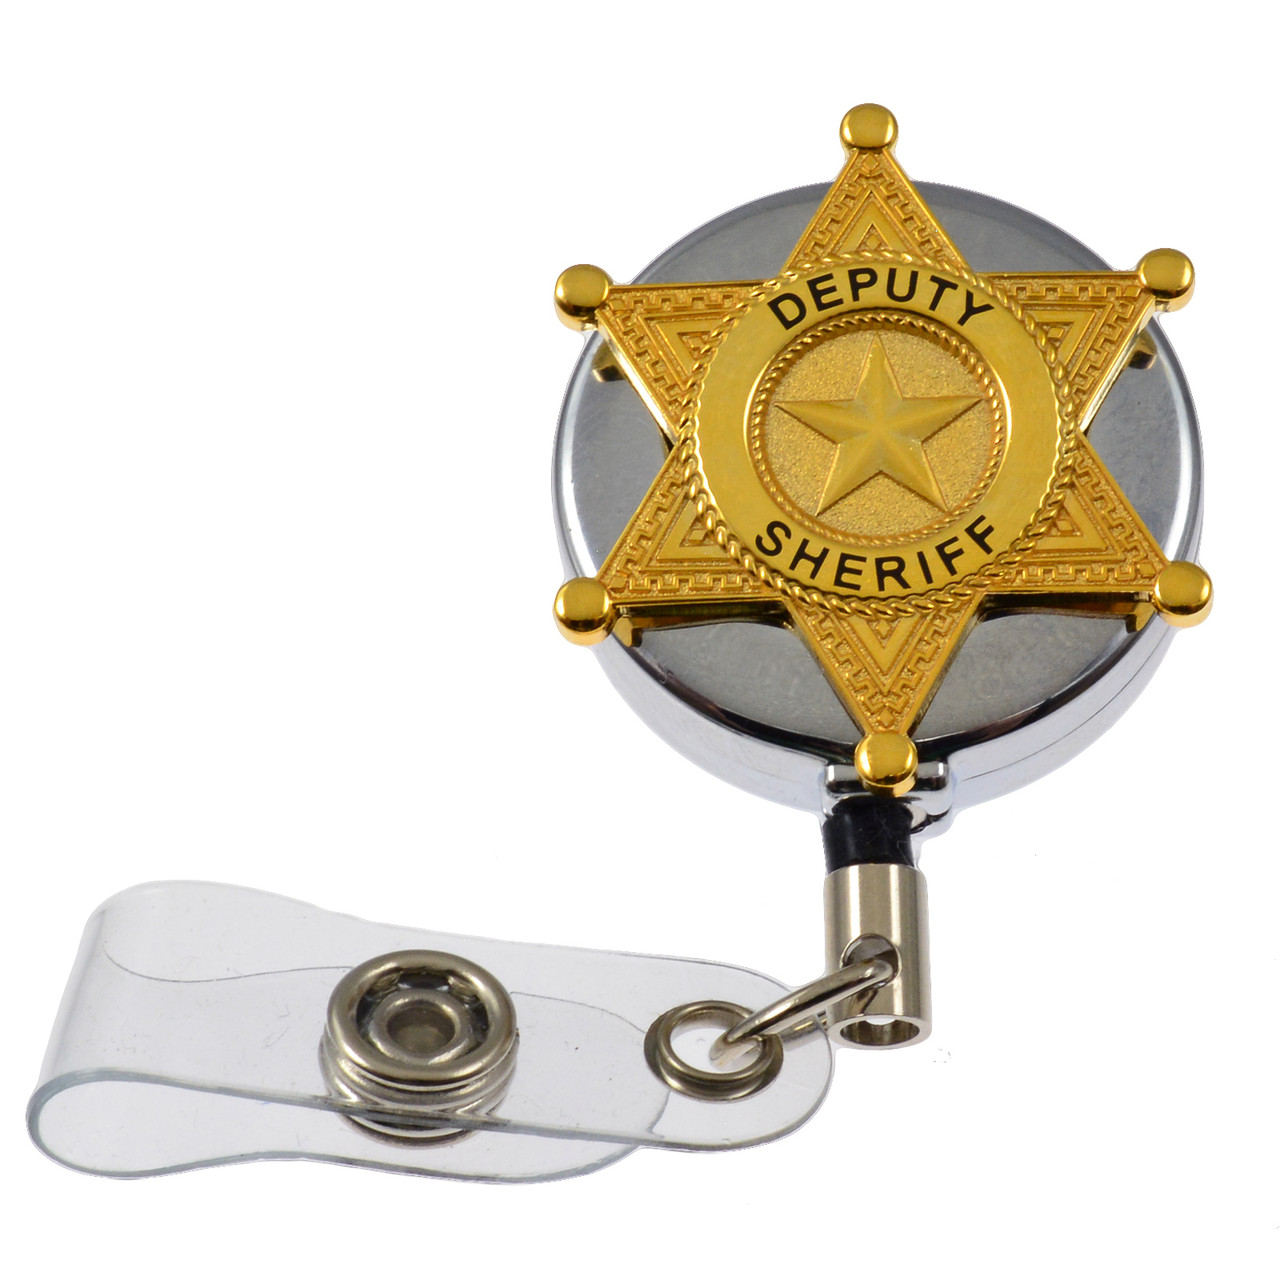 Deputy Sheriff Badge Retractable ID Card Holder, Sheriff Badge Reel